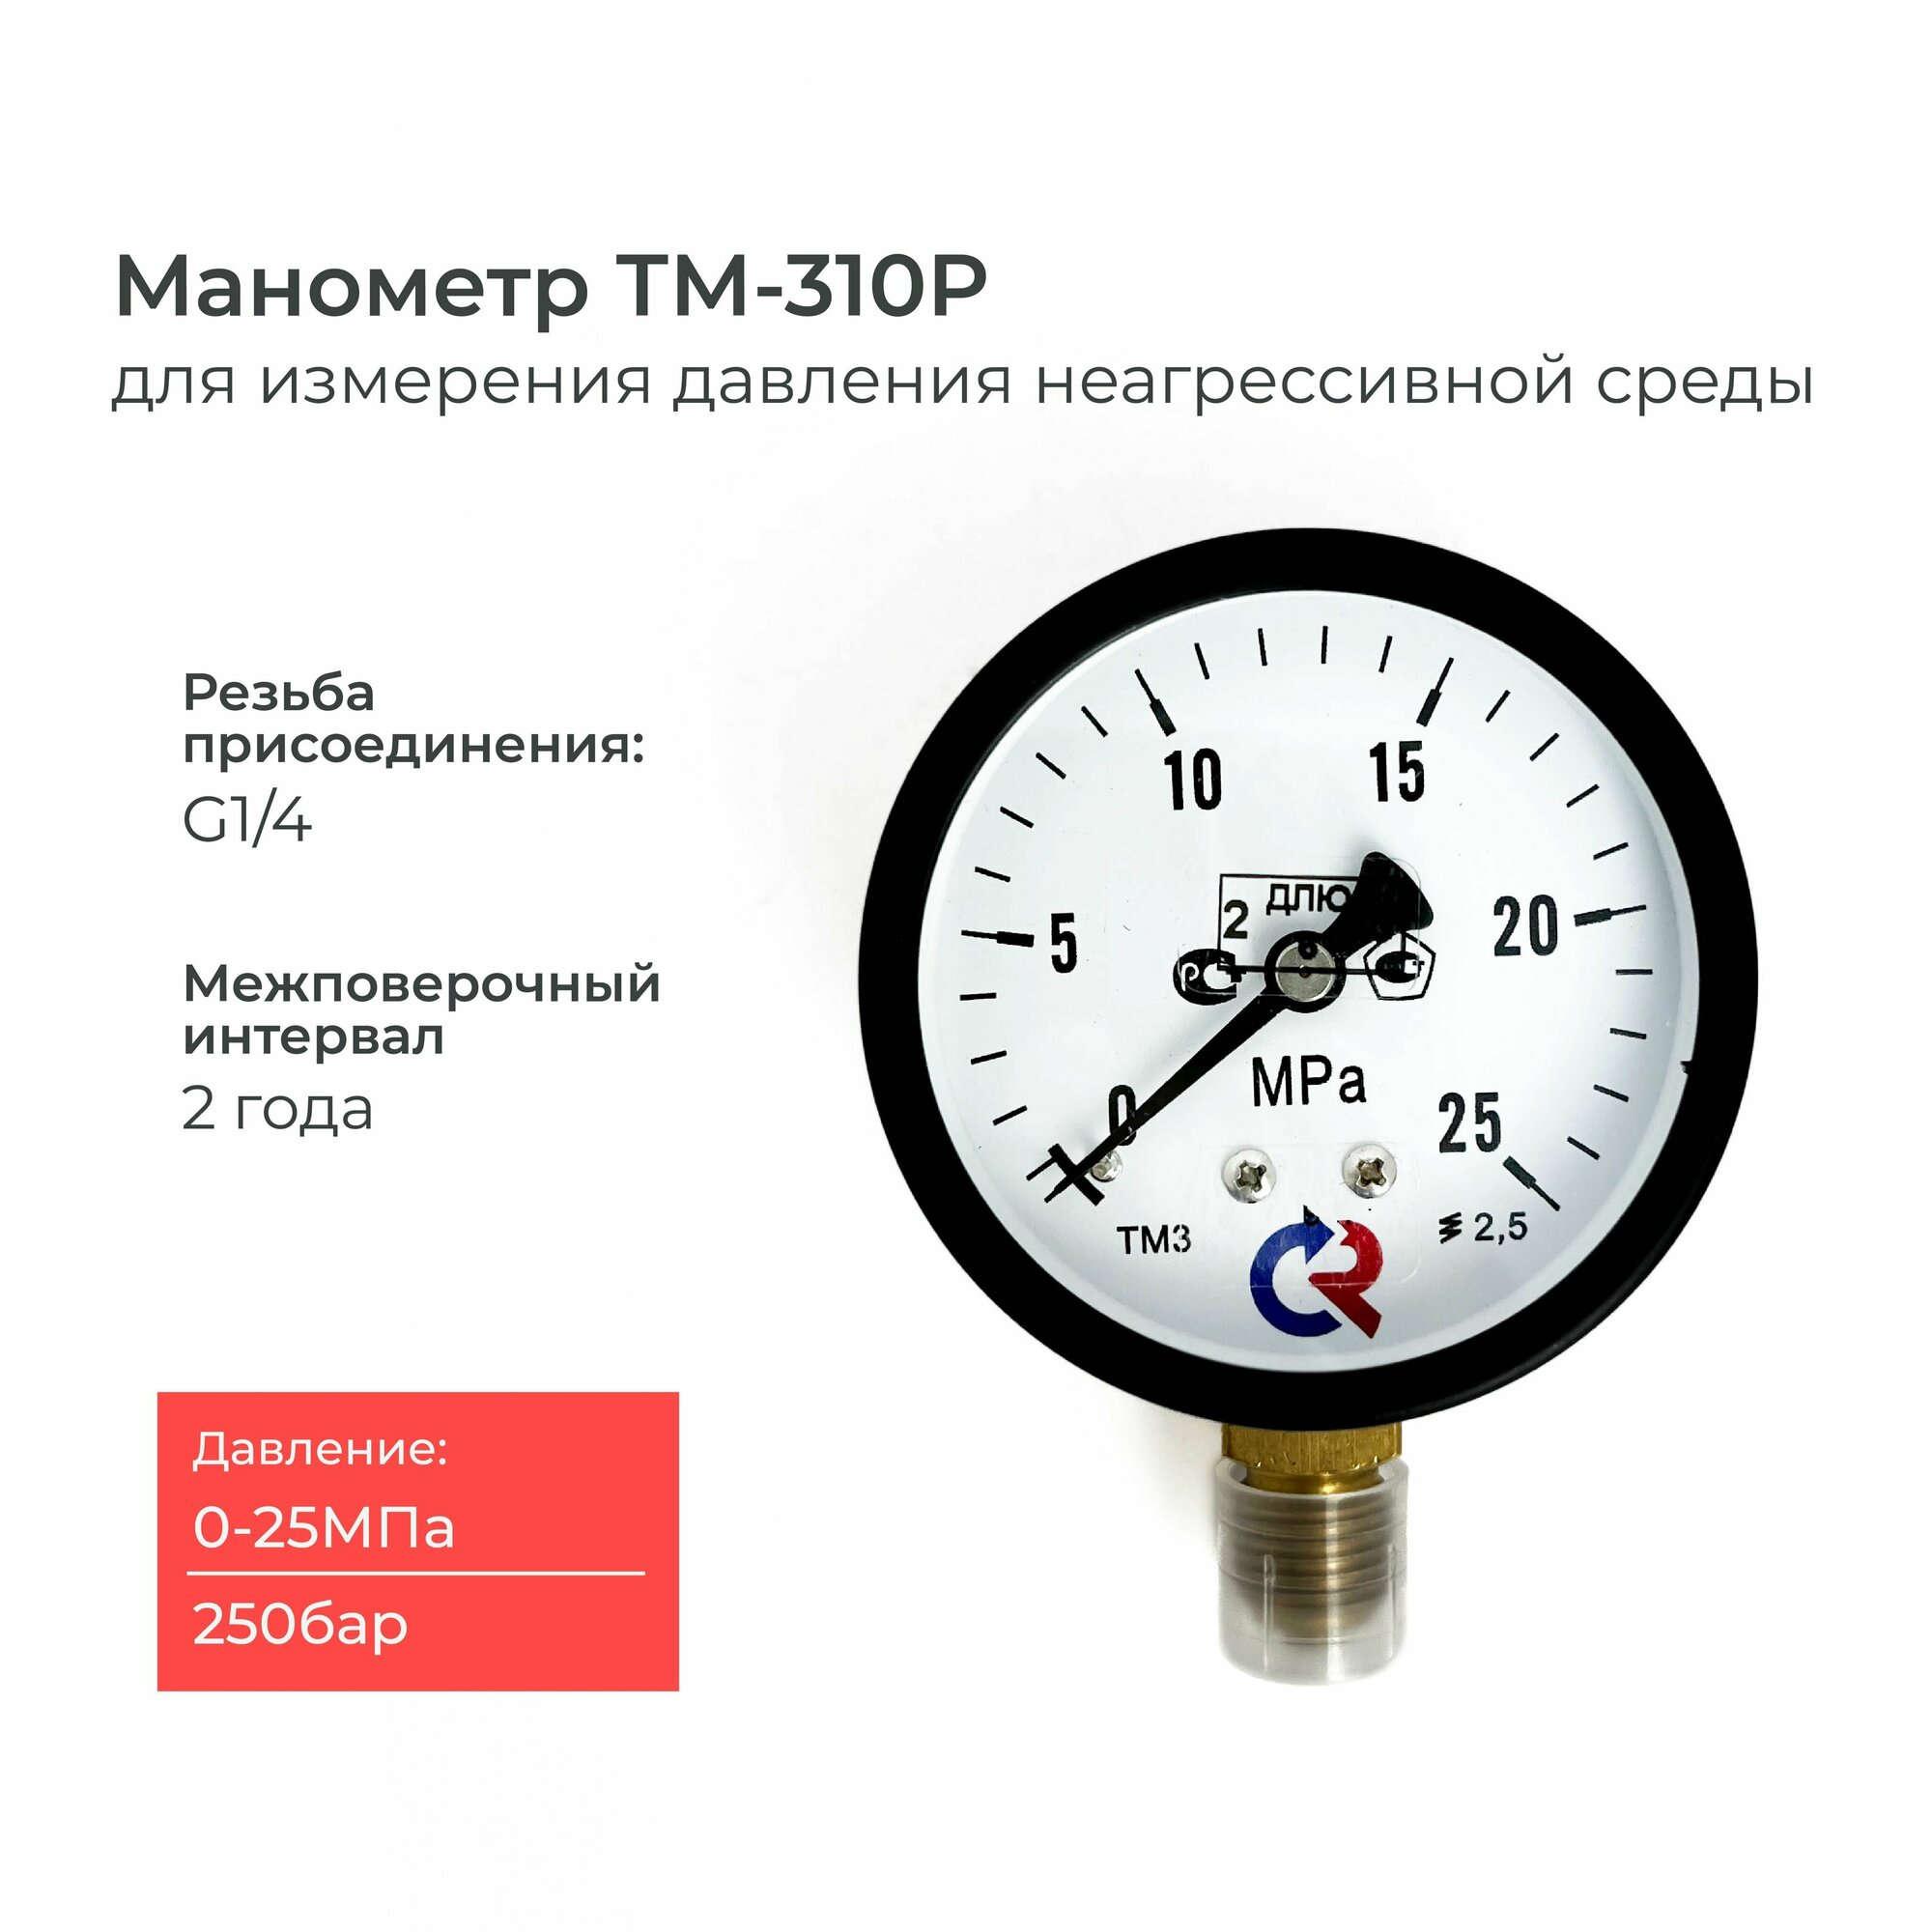 Манометр ТМ-310P давление 0-25 МПа (250 бар) резьба G1/4 класс точности 2,5 корпус 63 мм.